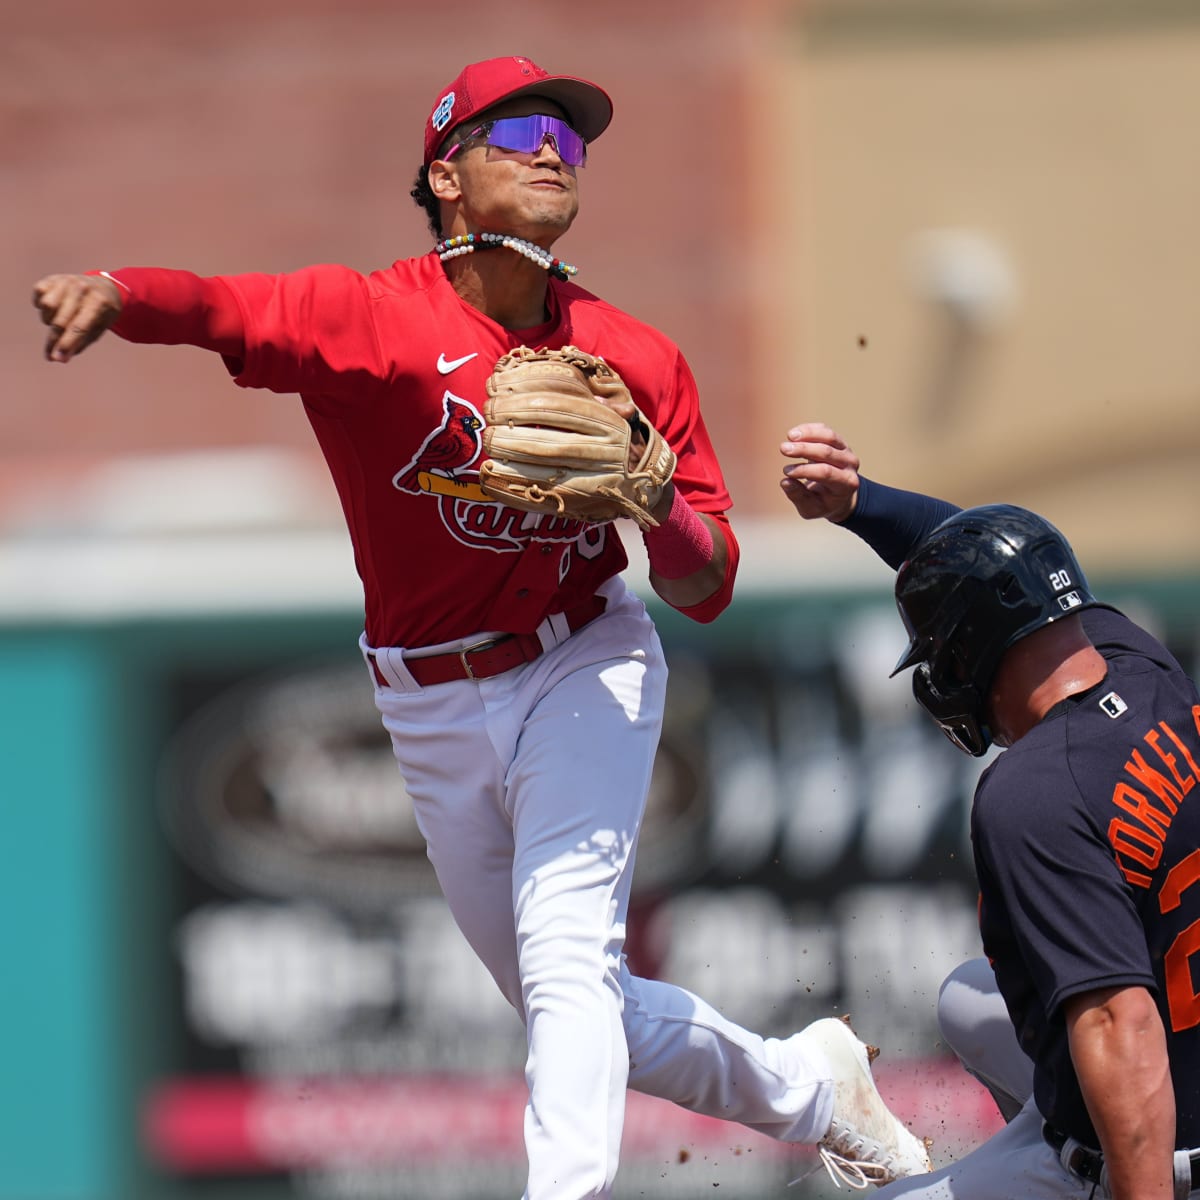 The St. Louis Cardinals are retiring Tony La Russa's jersey